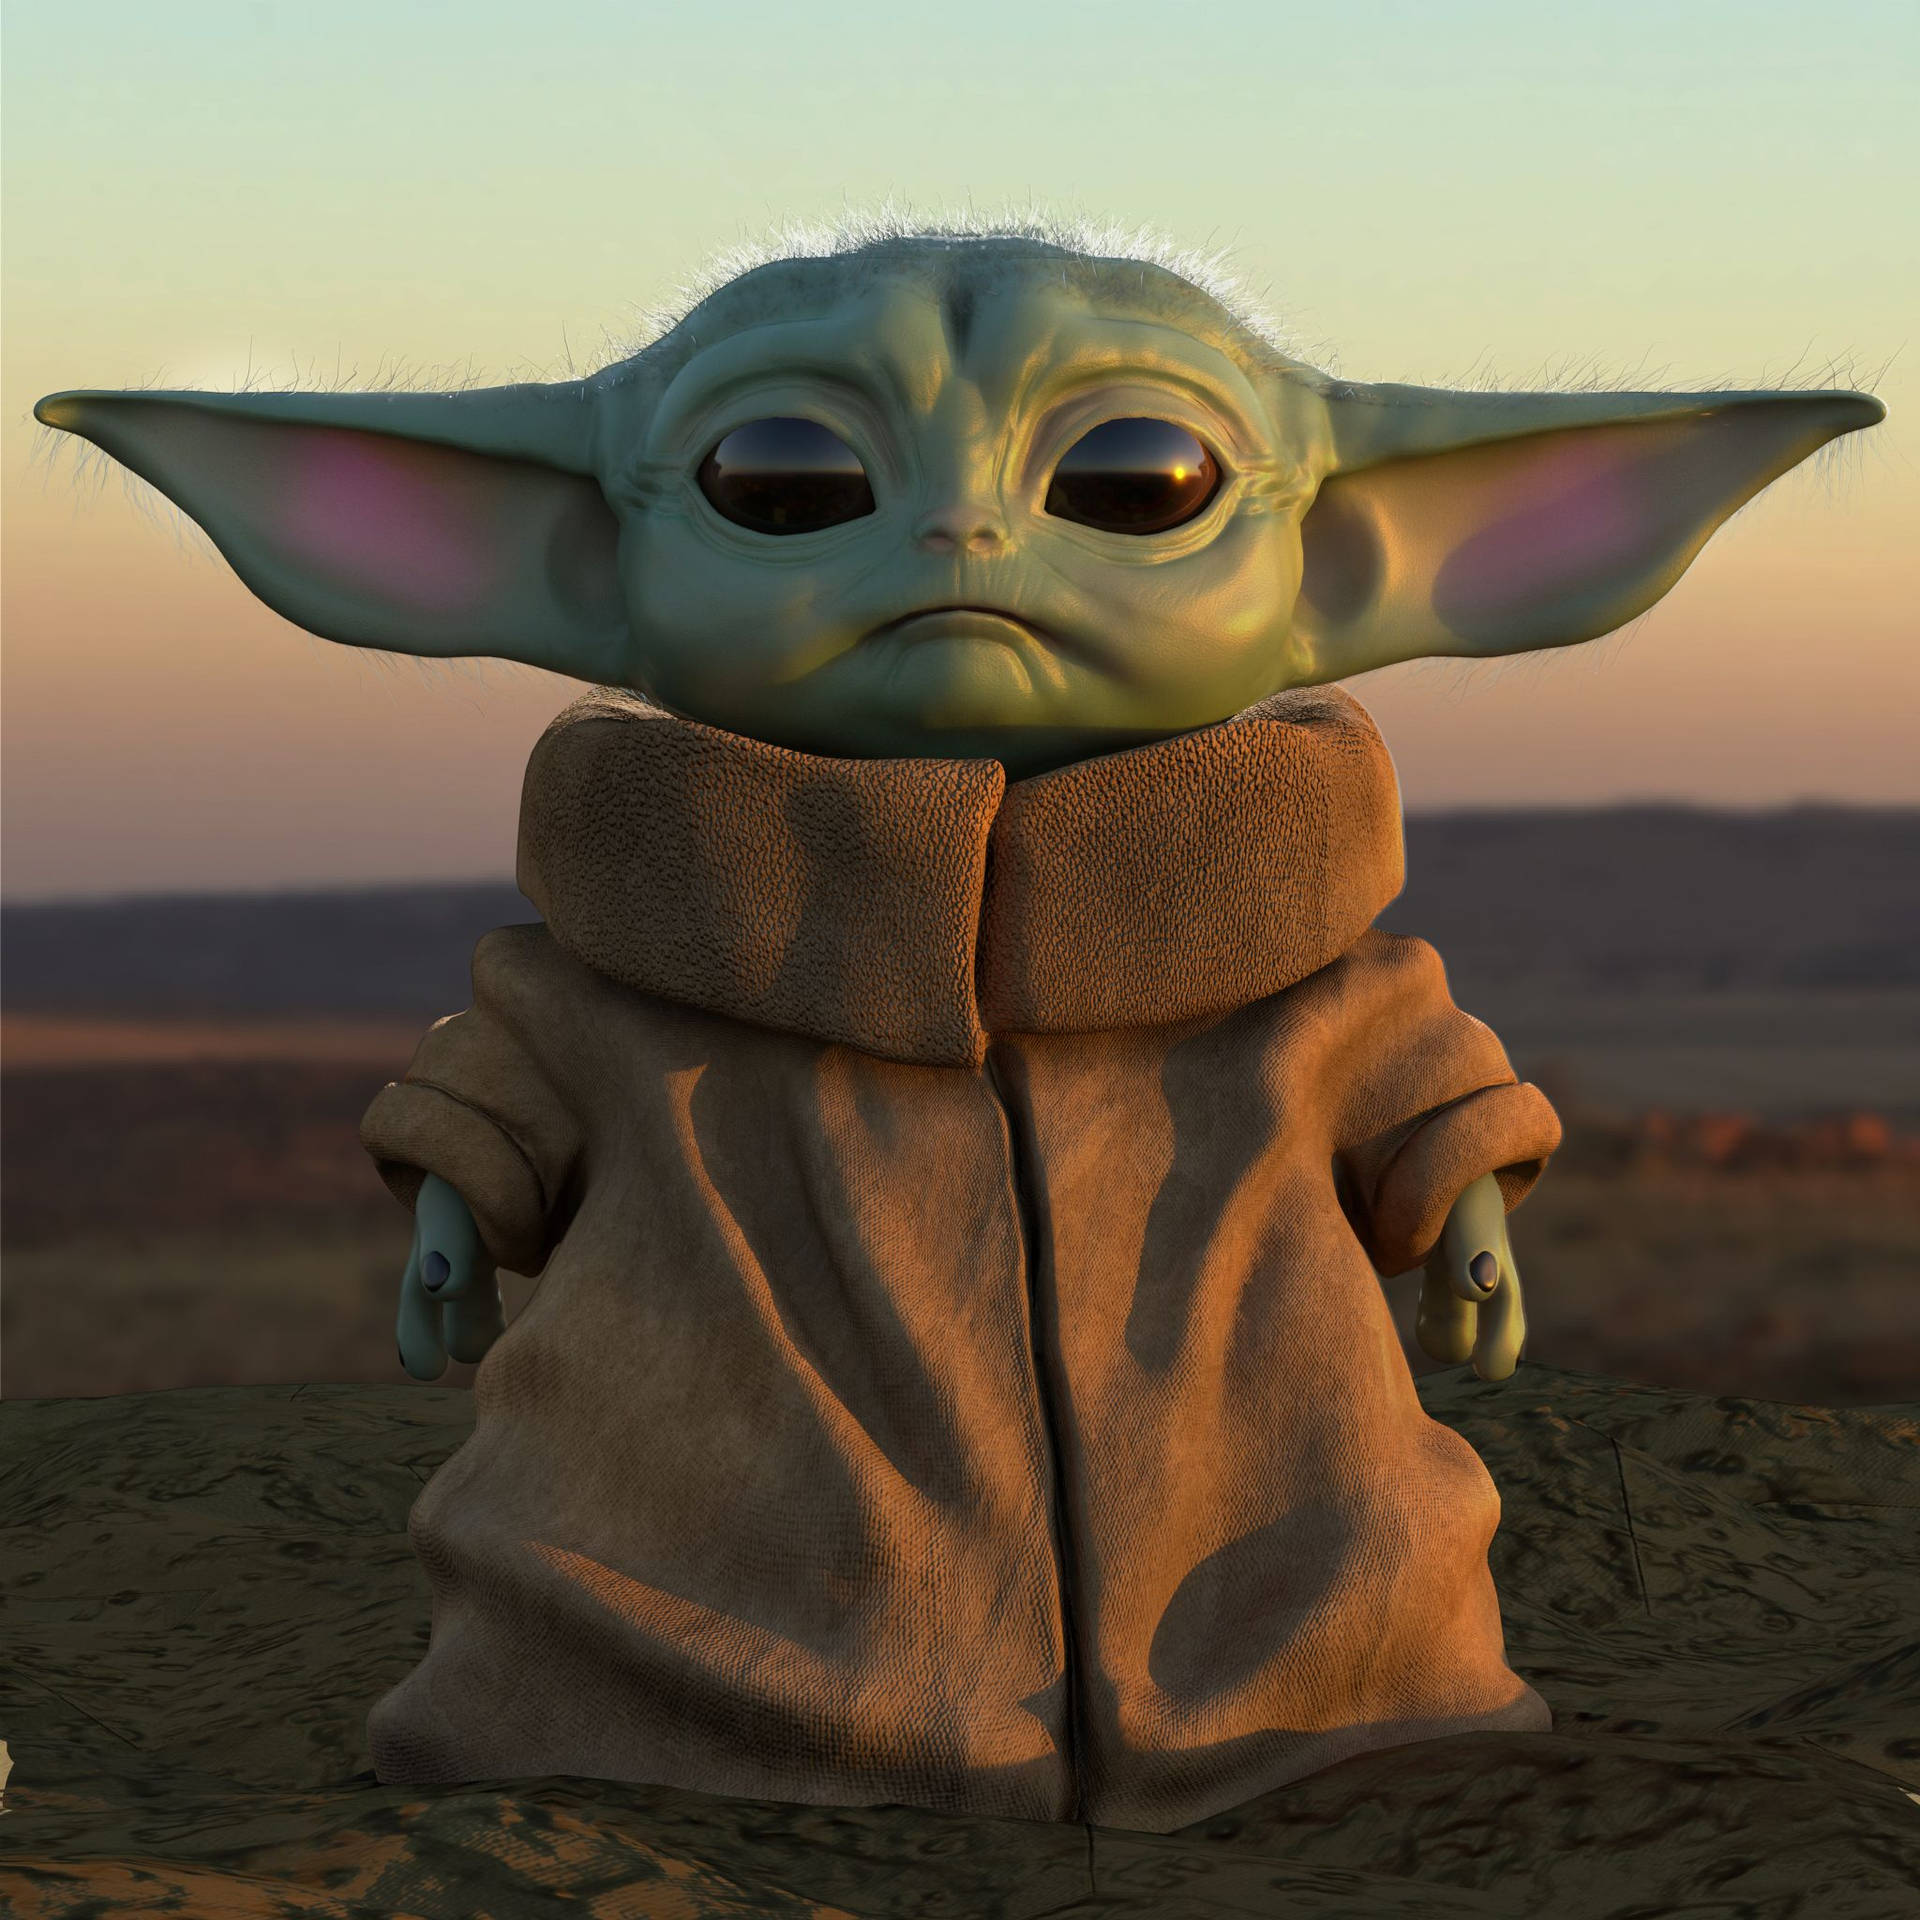 Hd Quality Baby Yoda Background